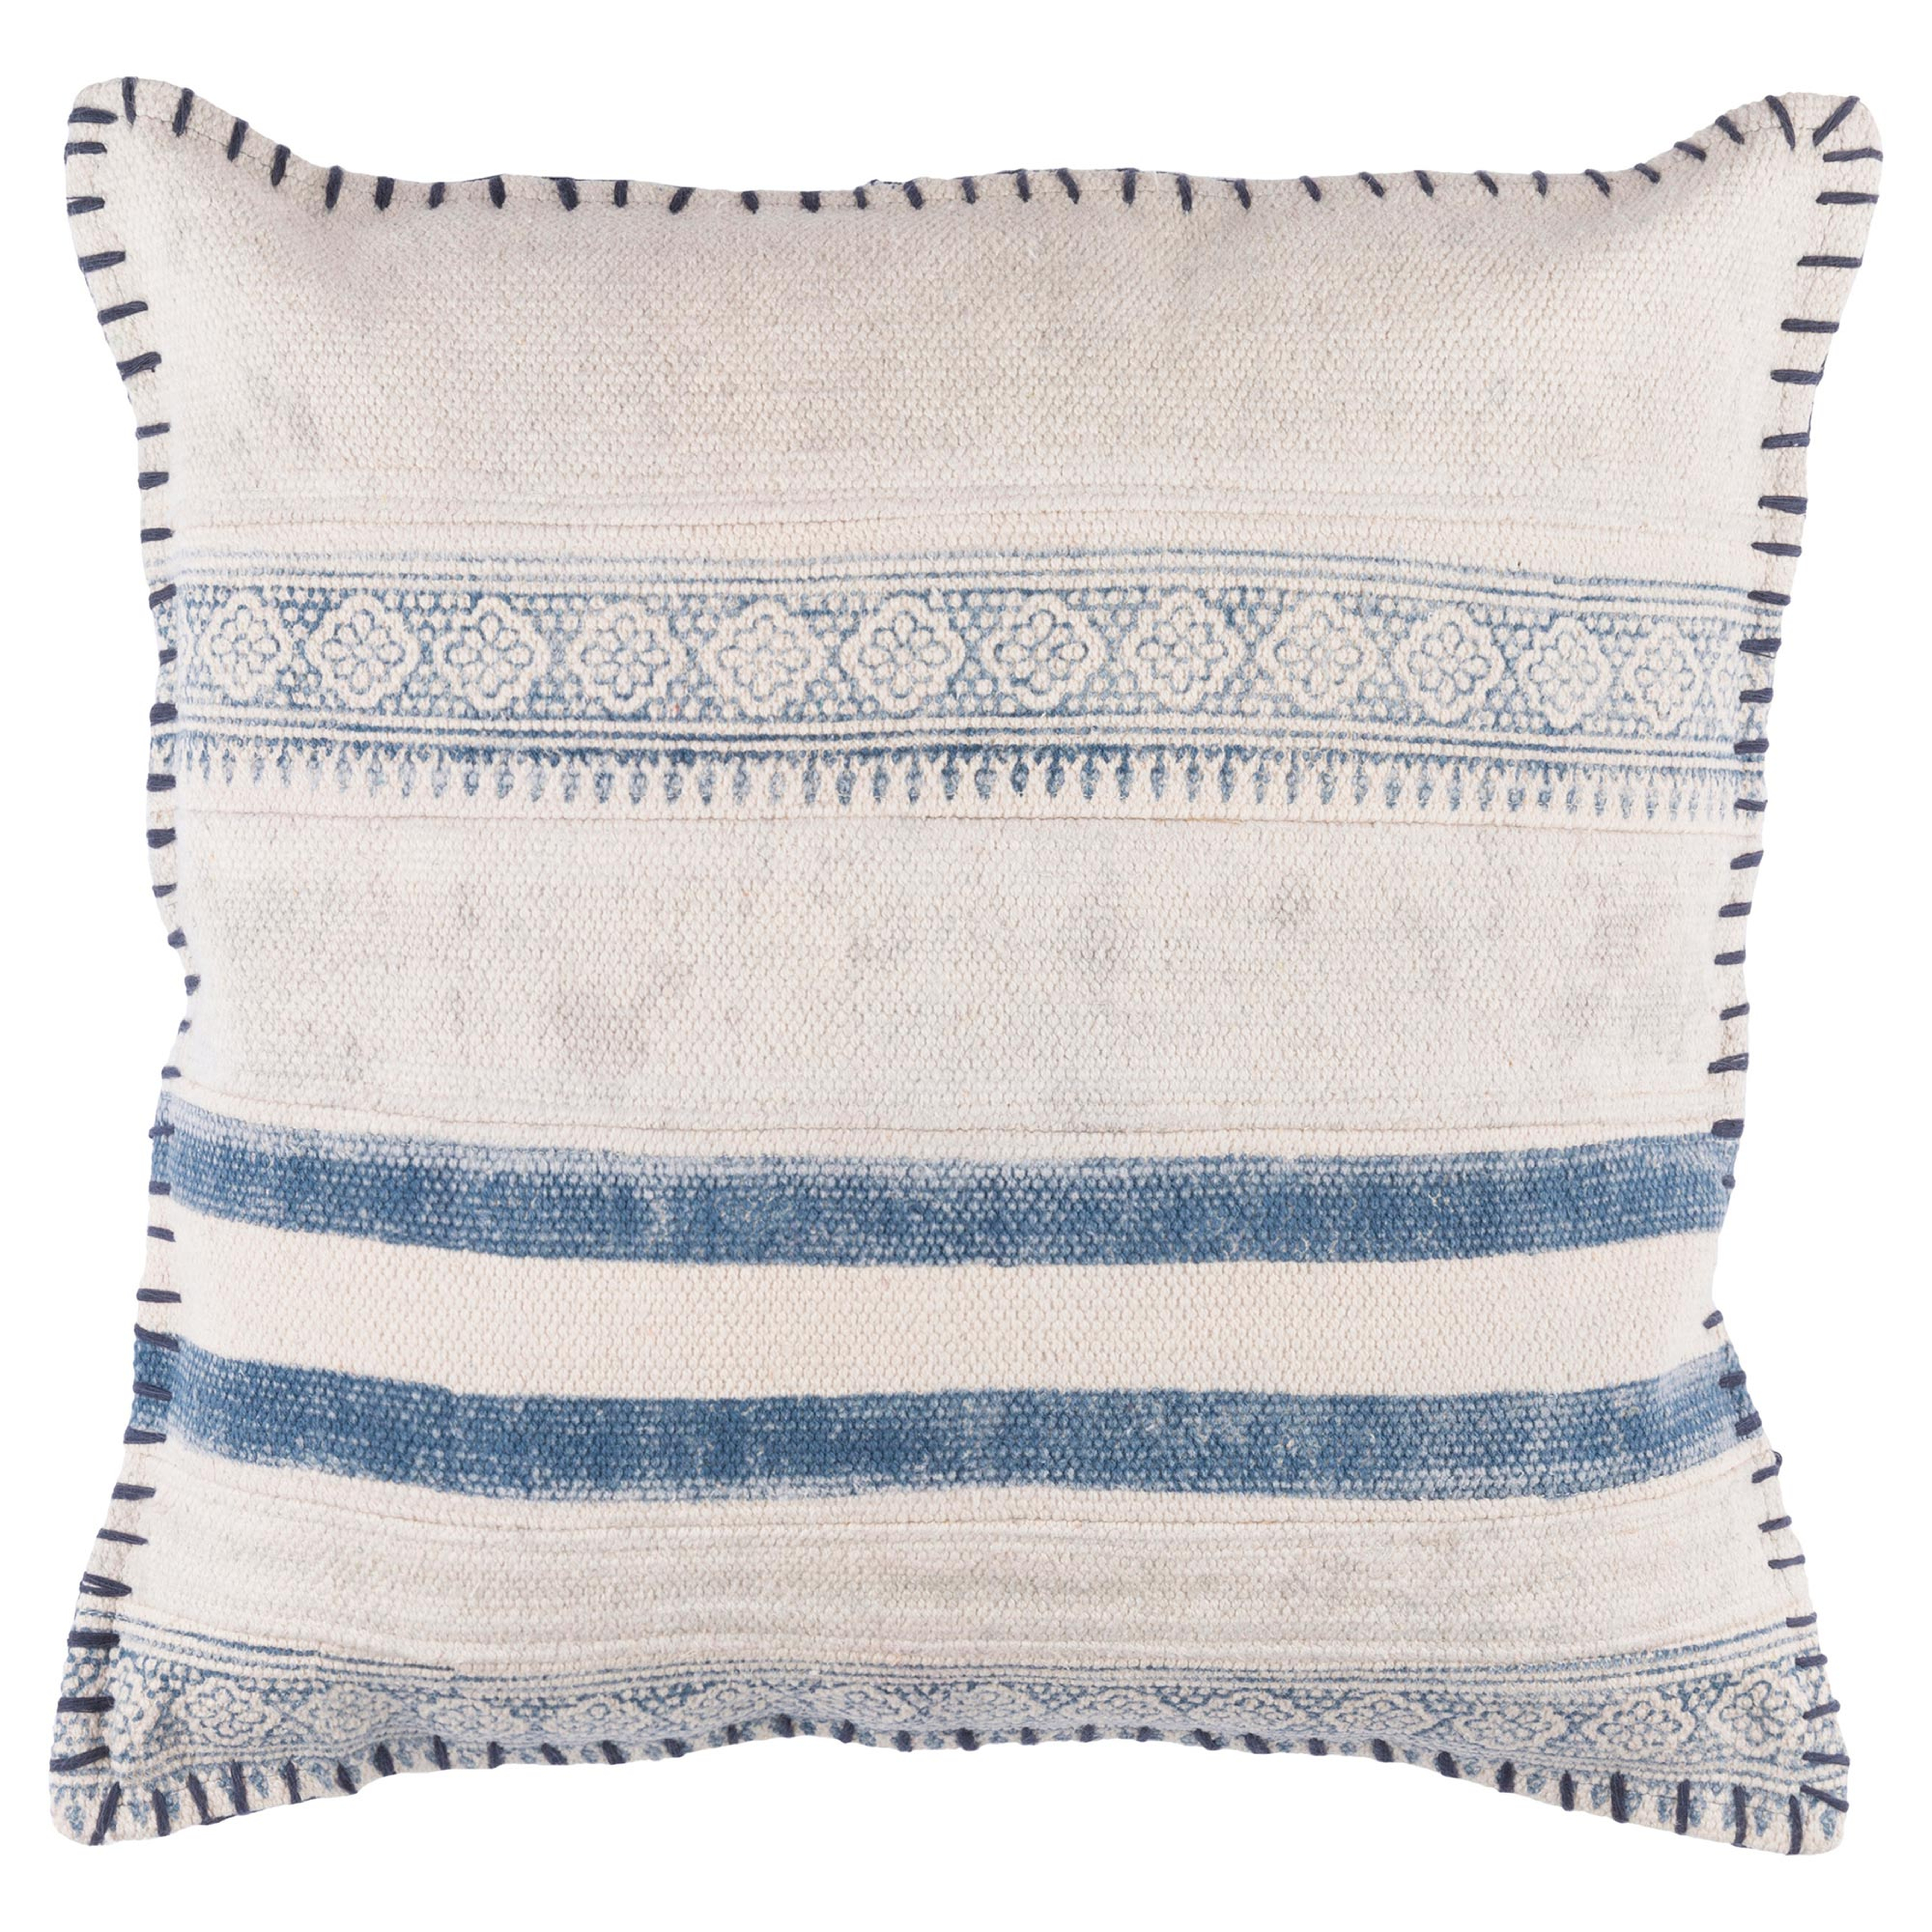 Bani Bazaar Shibori Pillow, Ivory & Blue , 20"x20" - Kathy Kuo Home